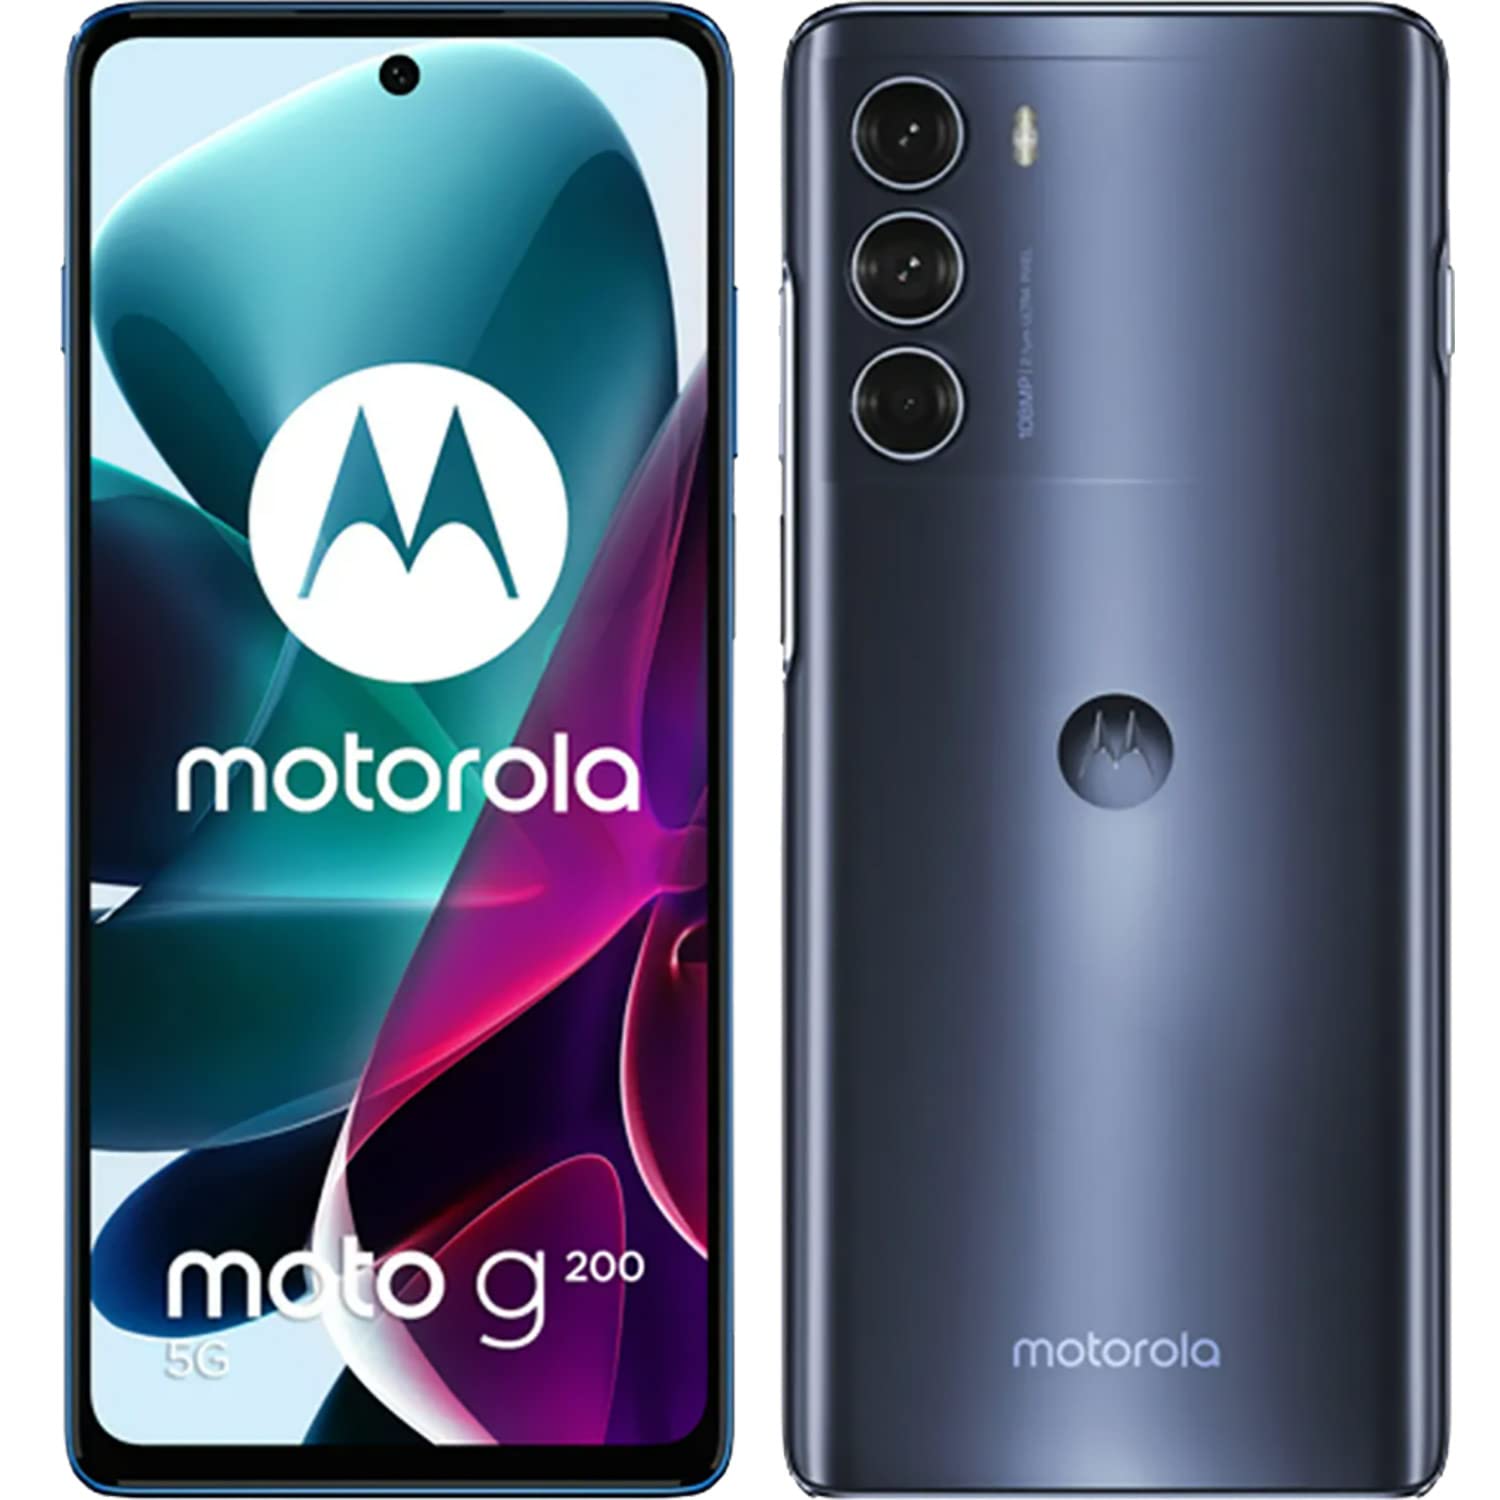  Motorola Moto G200 デュアル SIM 128GB ROM + 8GB RAM (GSM のみ | CDMA なし) 工場出荷時にロック解除された 5G スマートフォン (ステラ ブルー) - インターナショナル...